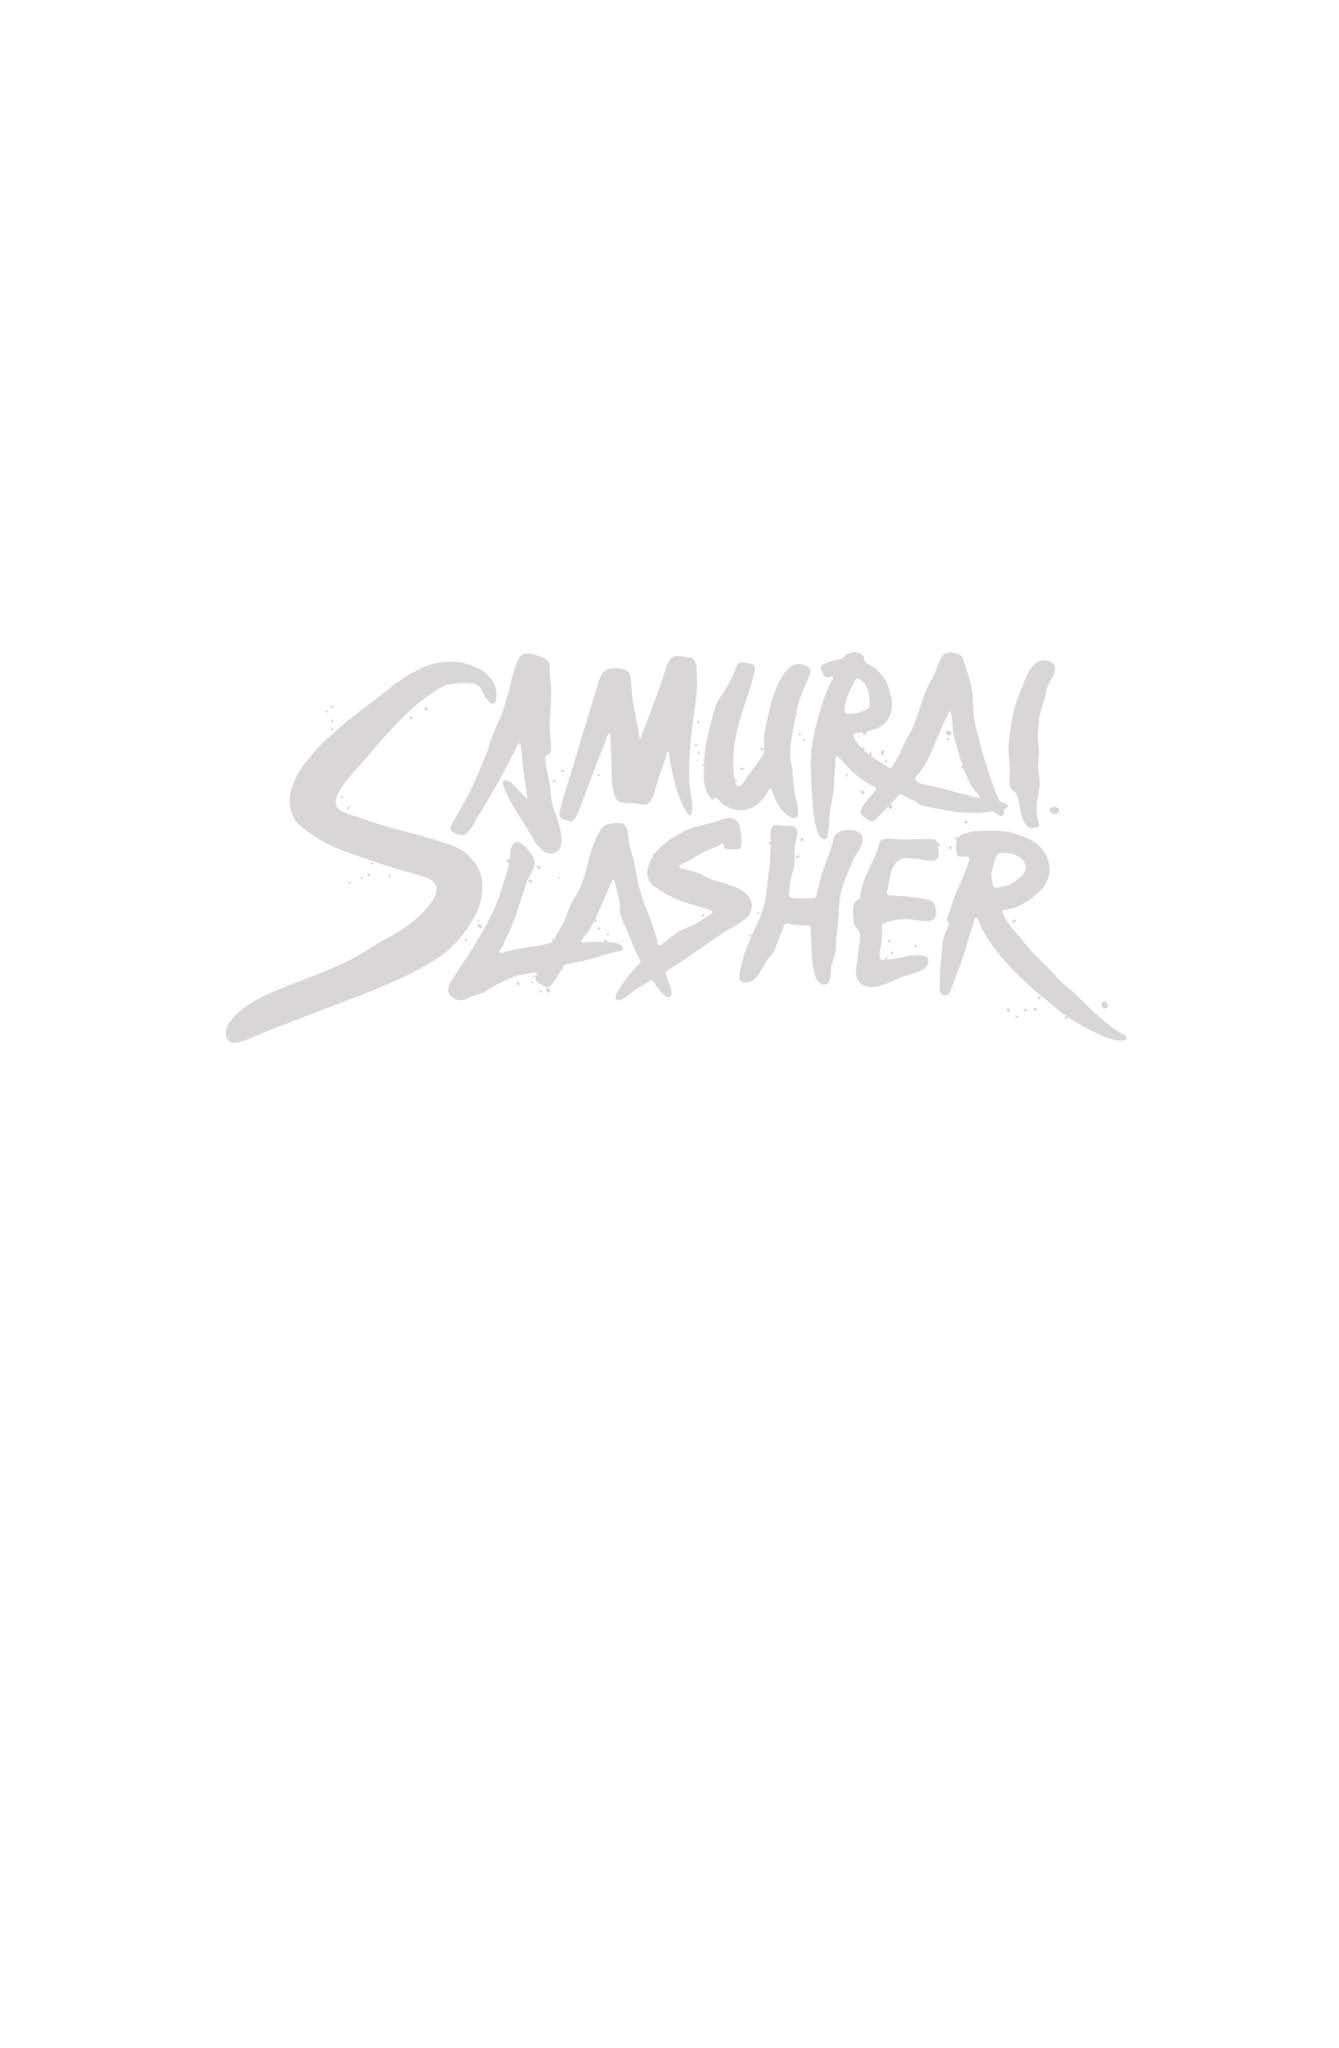 Read online Samurai Slasher comic -  Issue # TPB 1 - 41